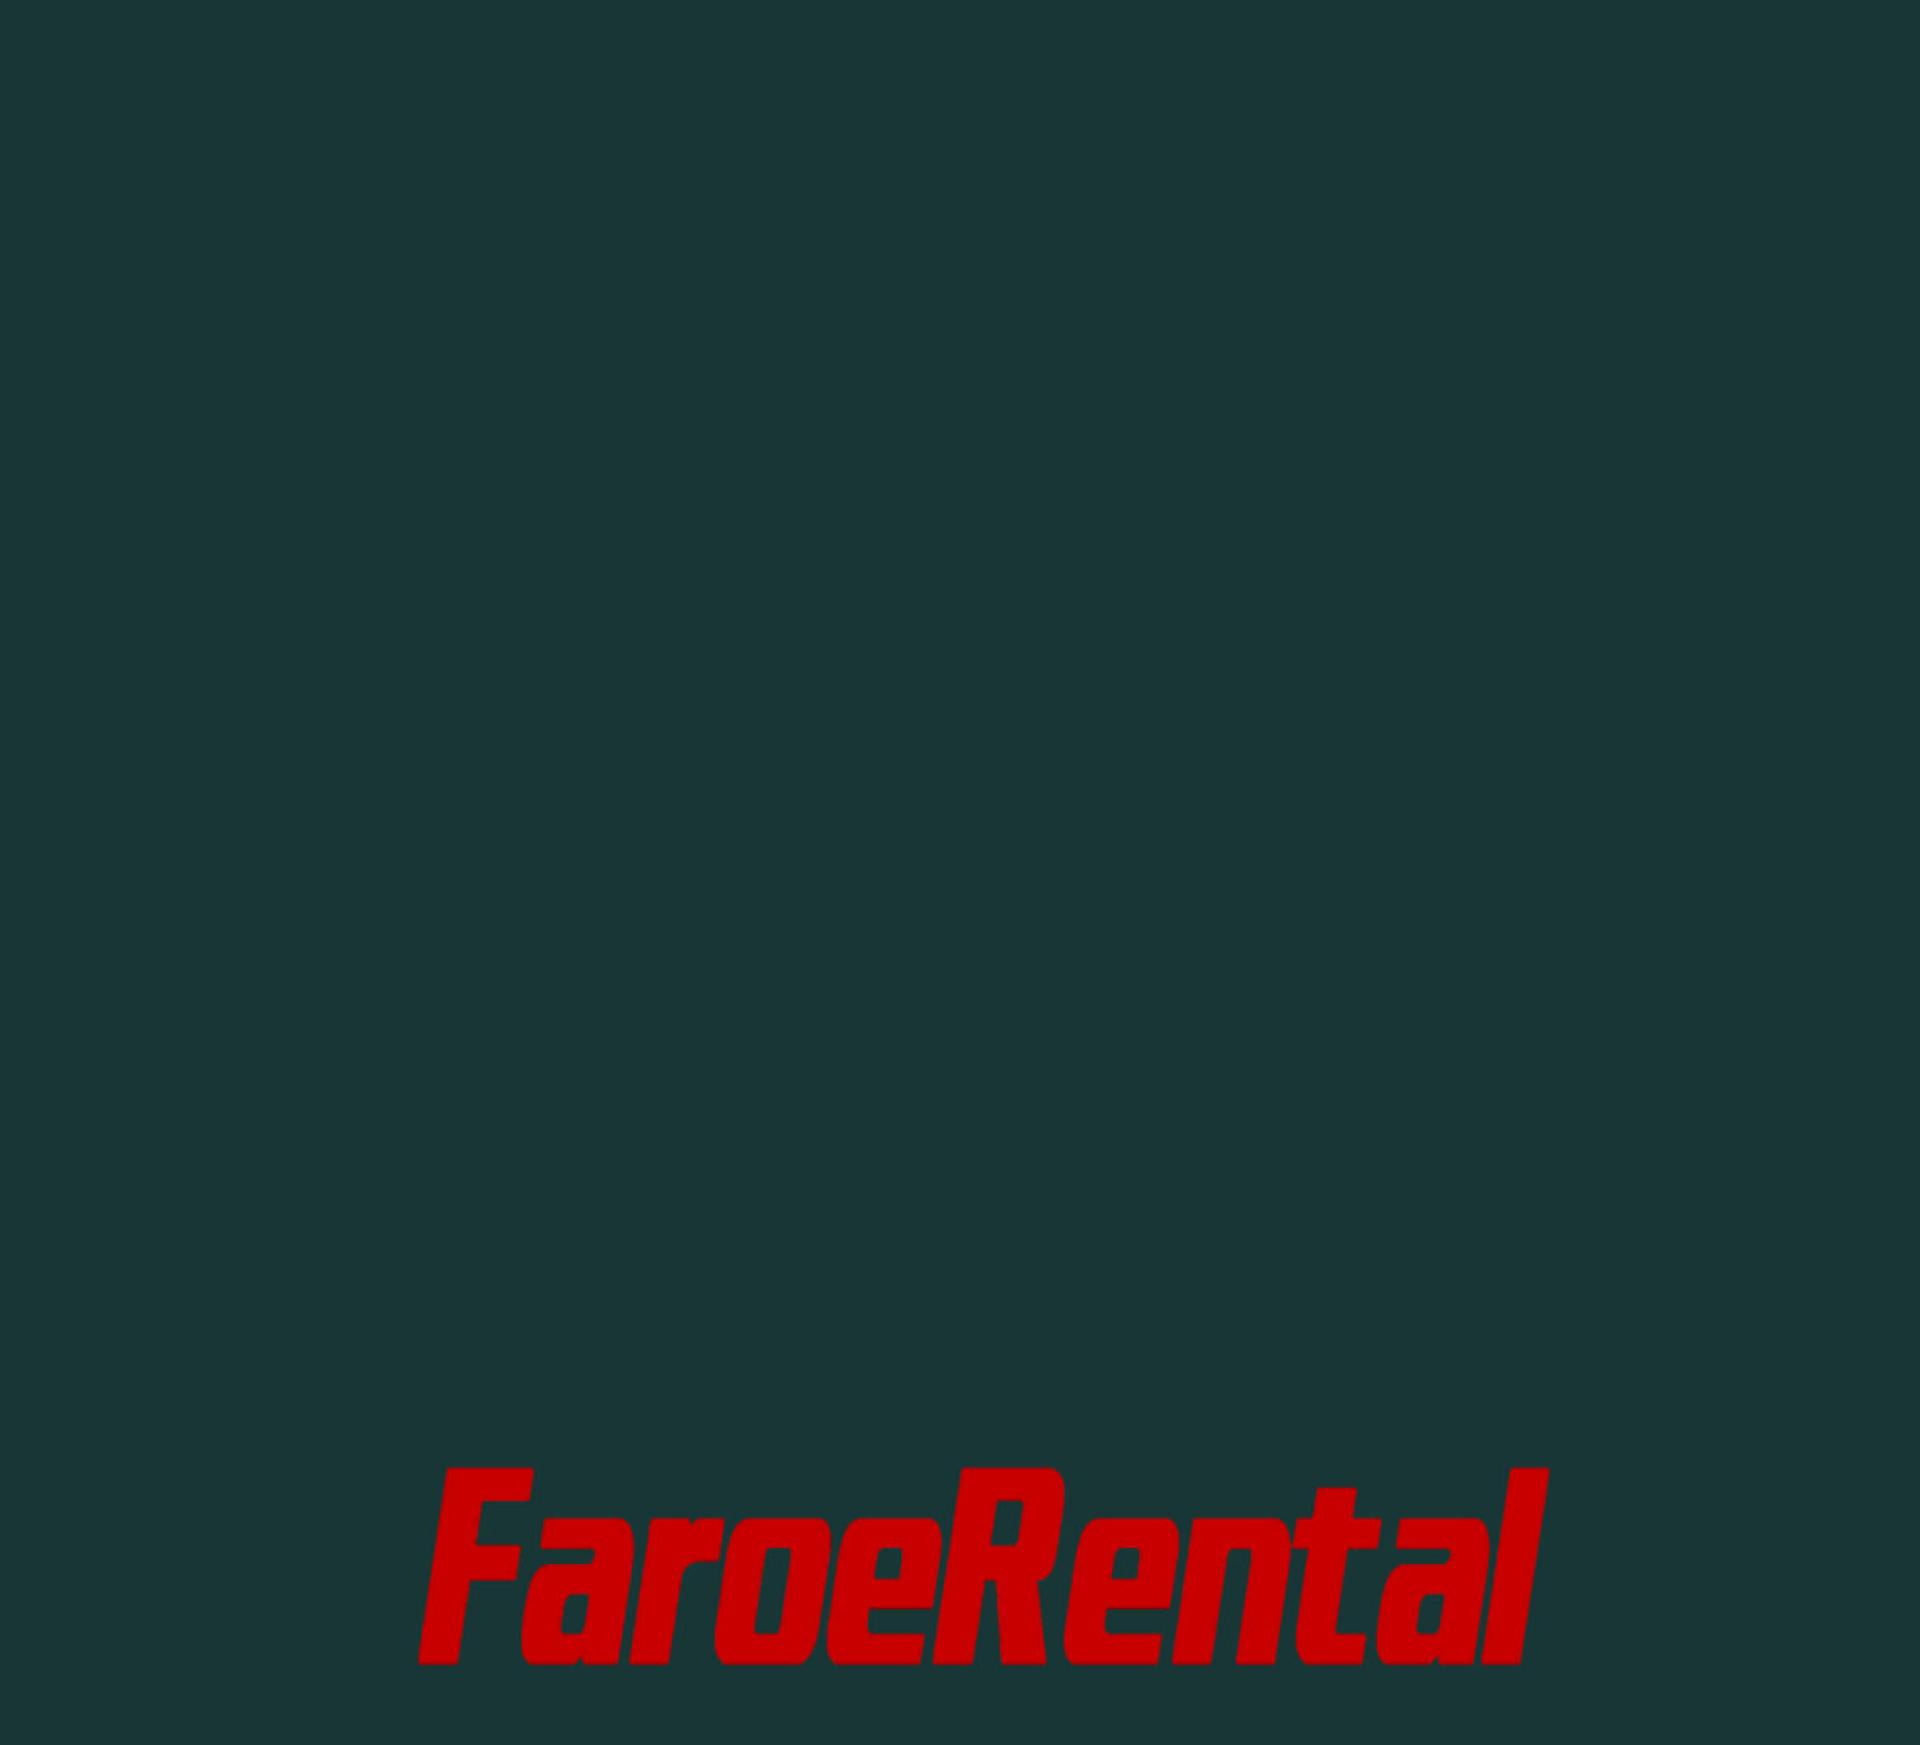 Thumbnail of - FaroeRental logo
 